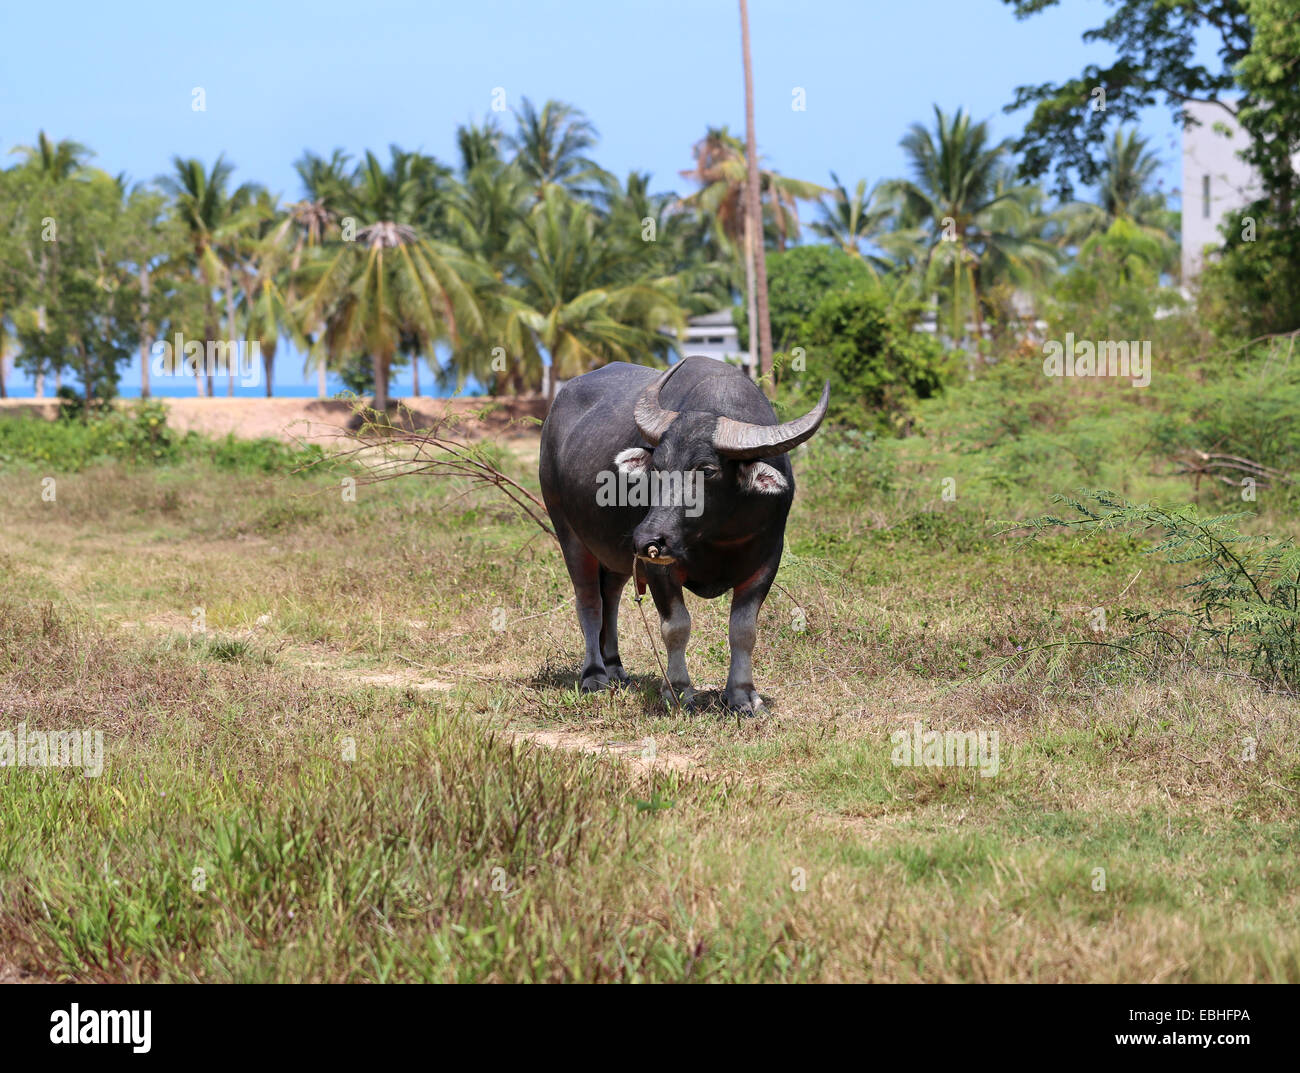 Black buffalo grazing in a field in Thailand on Koh Samui Stock Photo